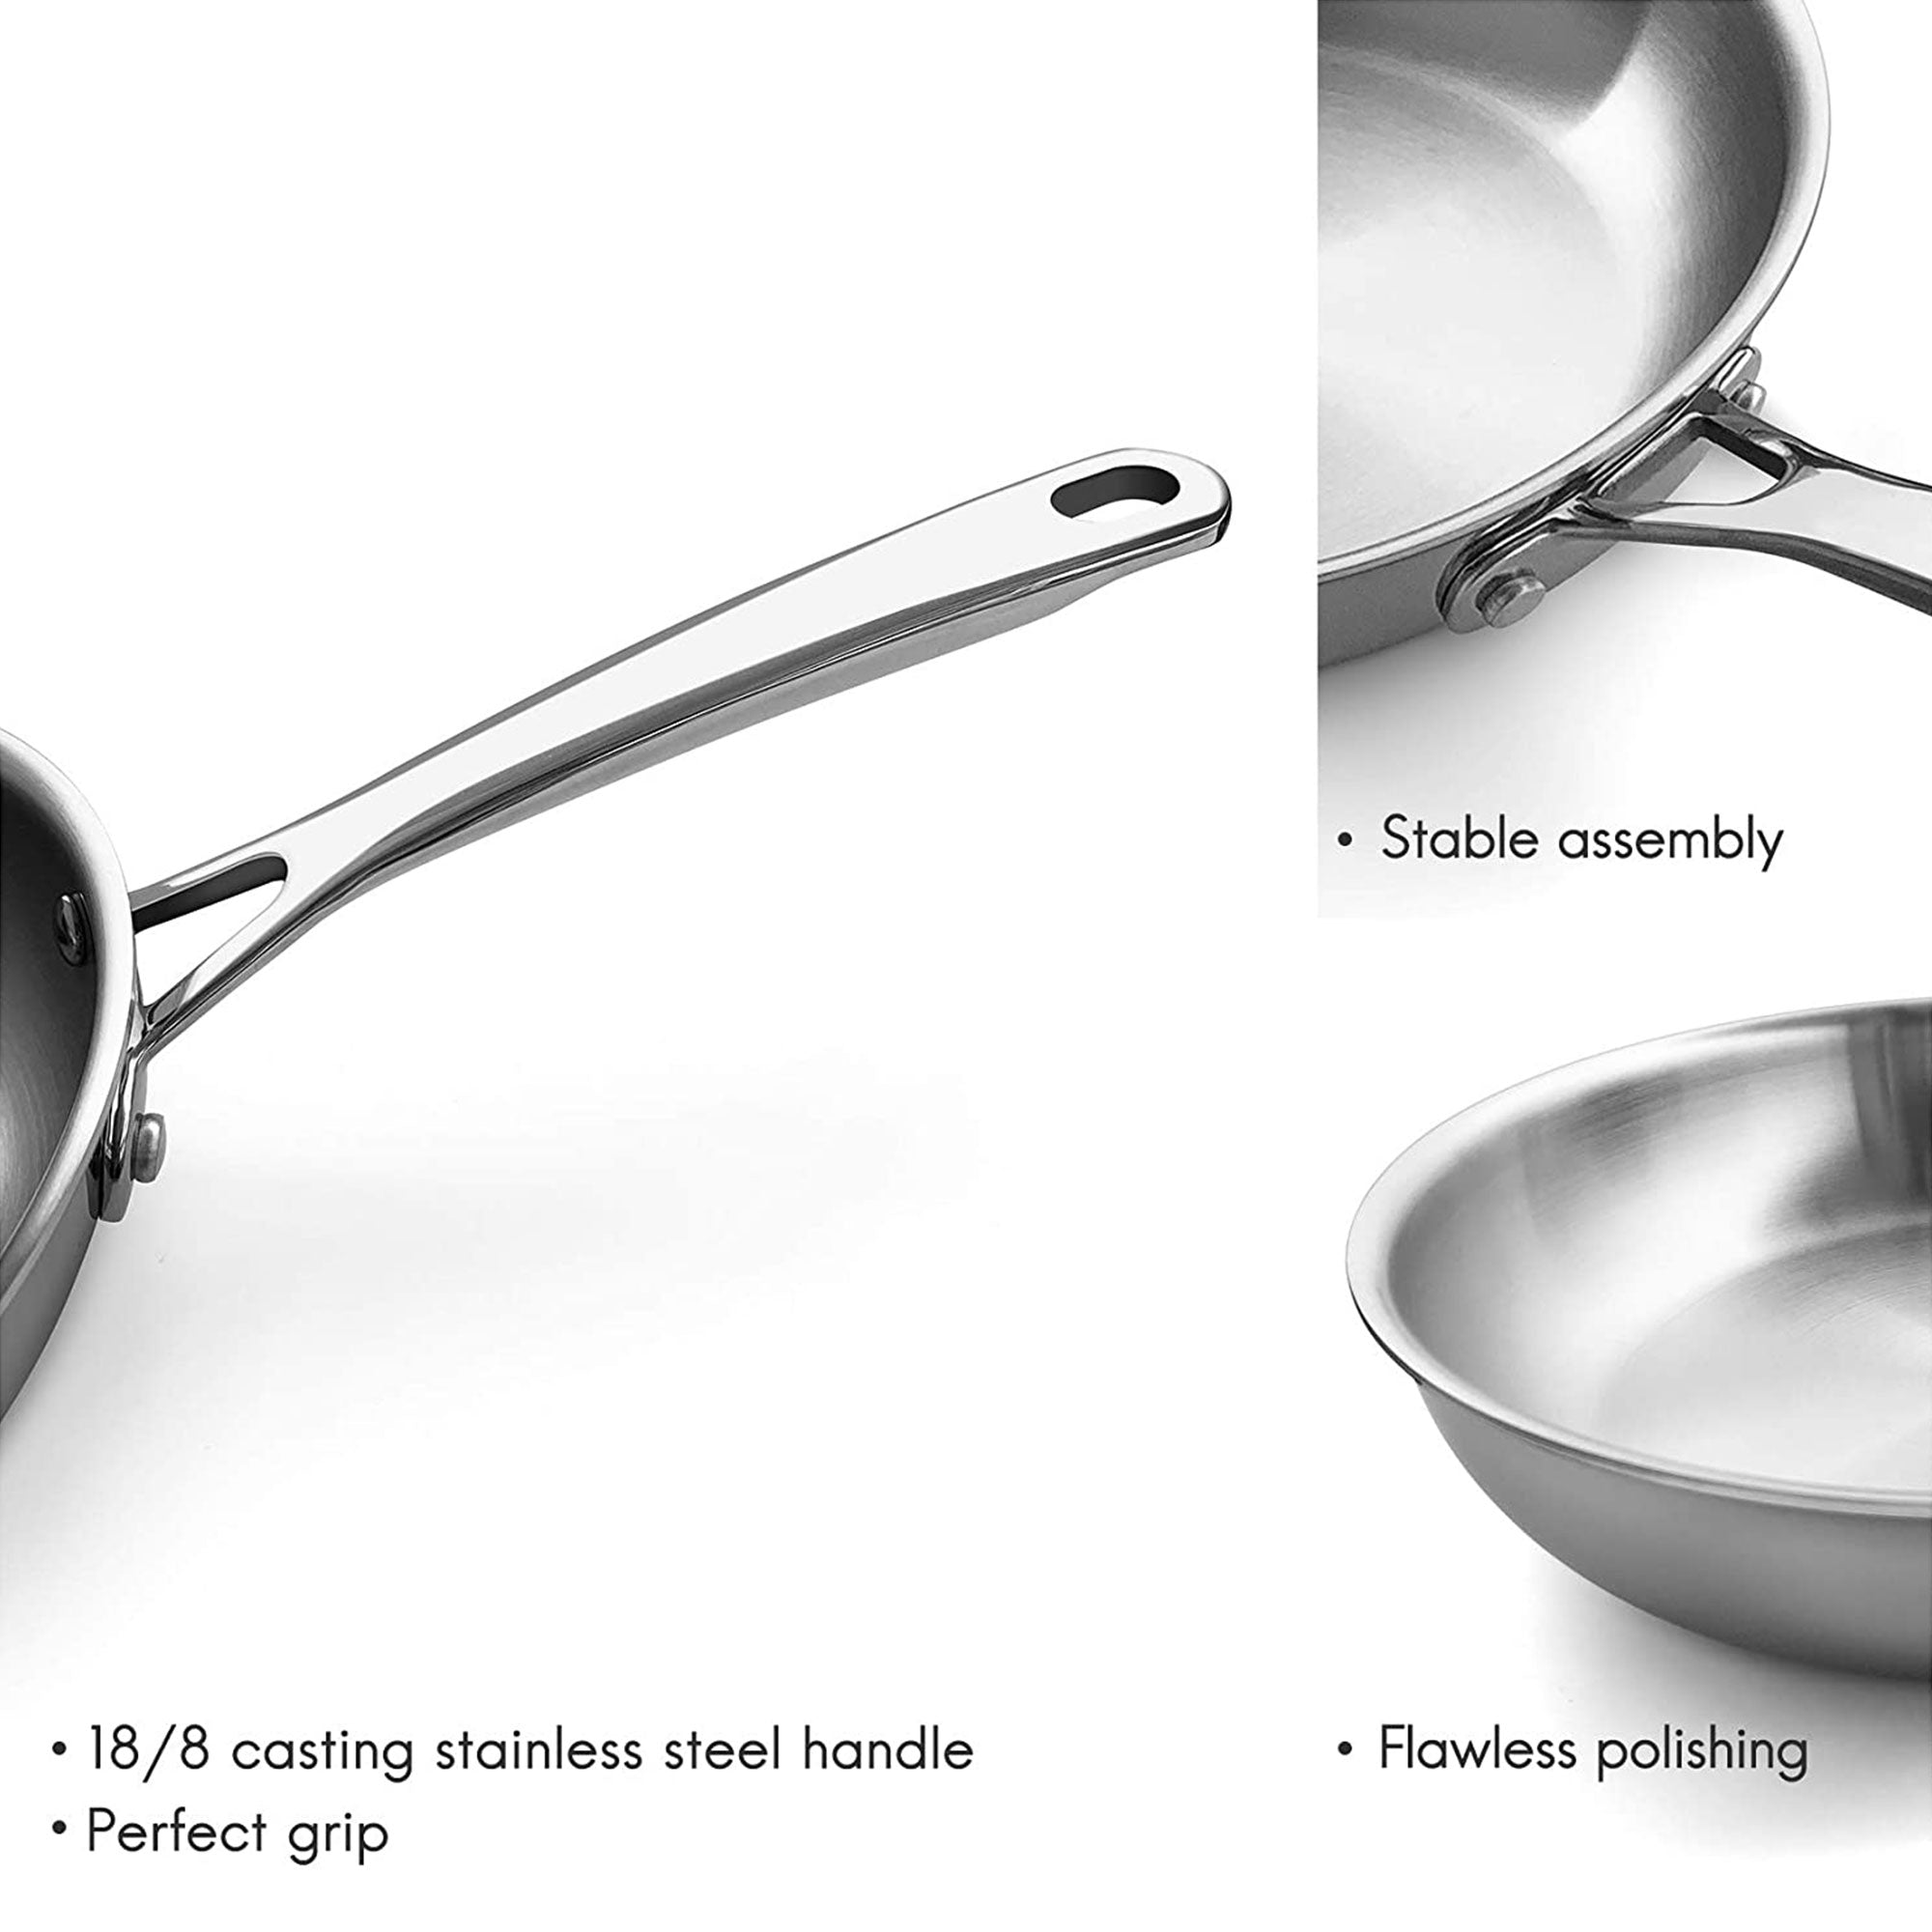 8 Stainless Steel Frying Pan